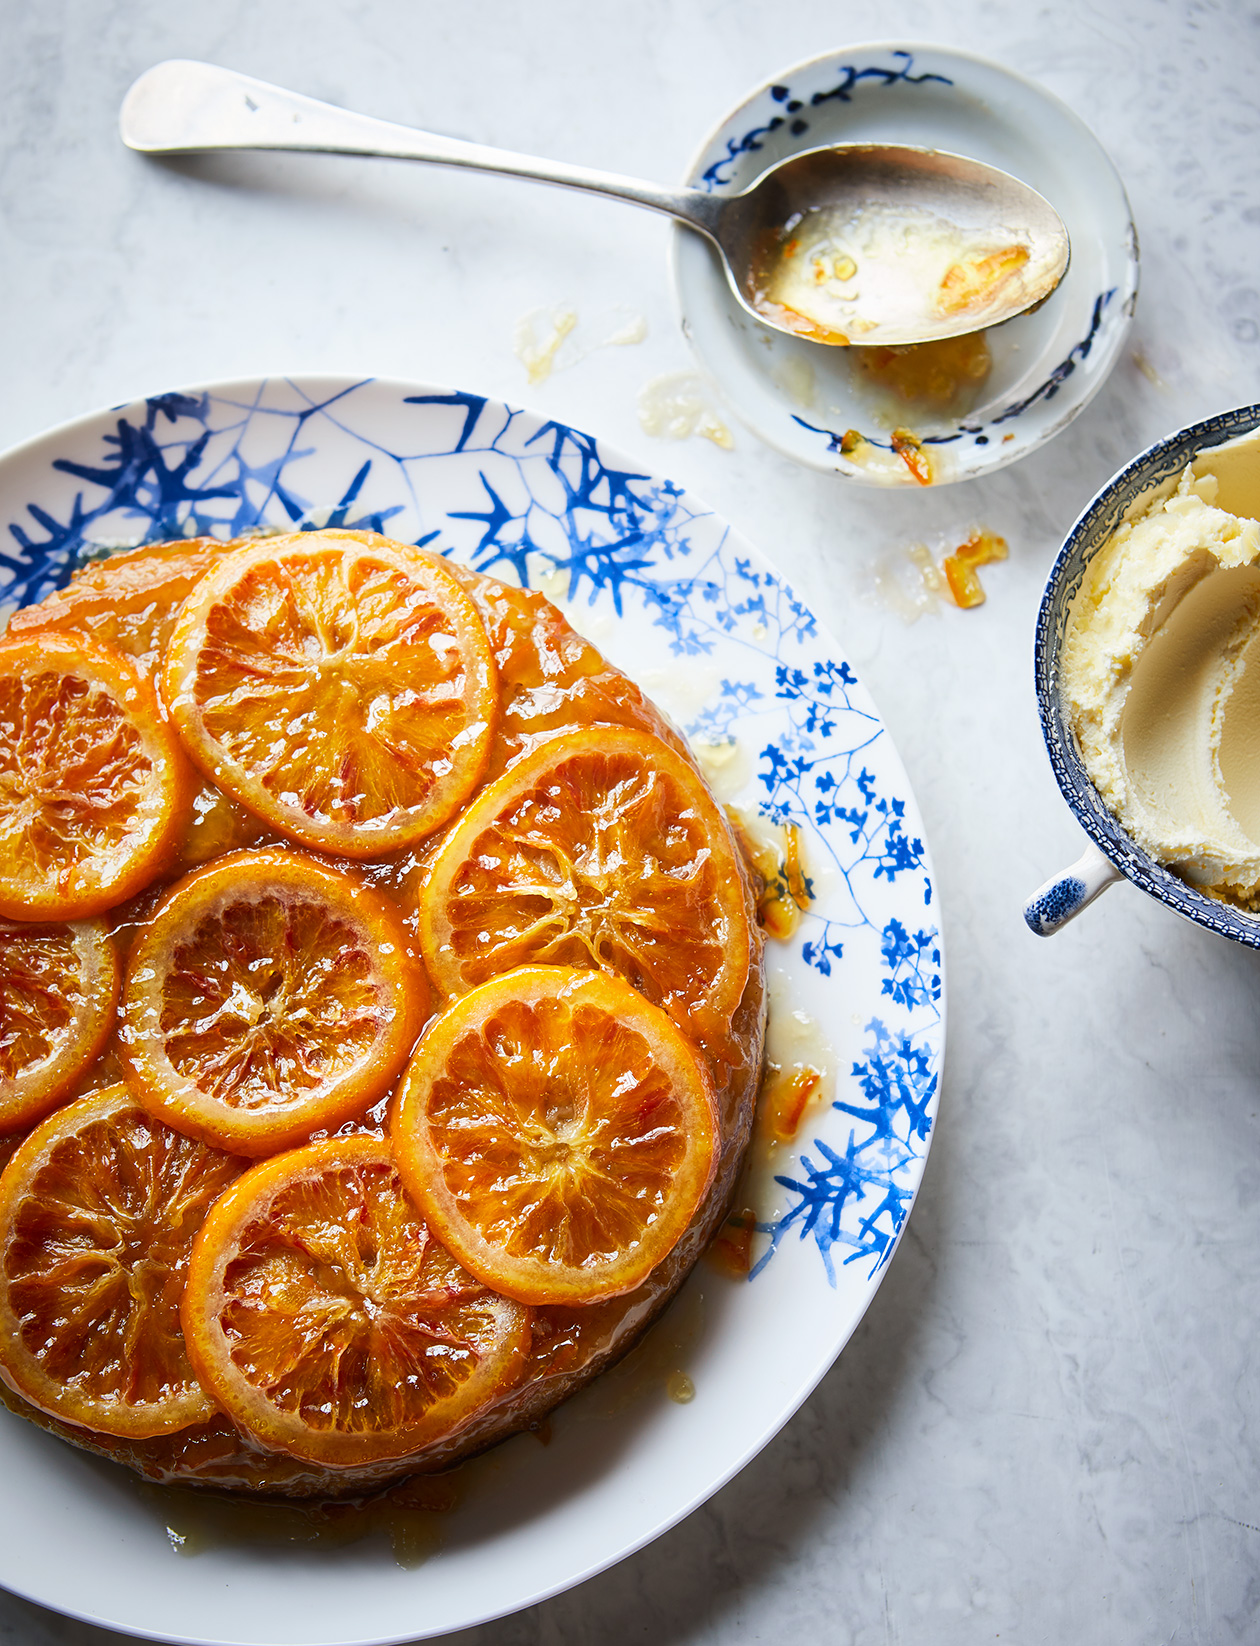 This Greek Orange Cake Pudding From Chef Mina Stone Is Next-Level